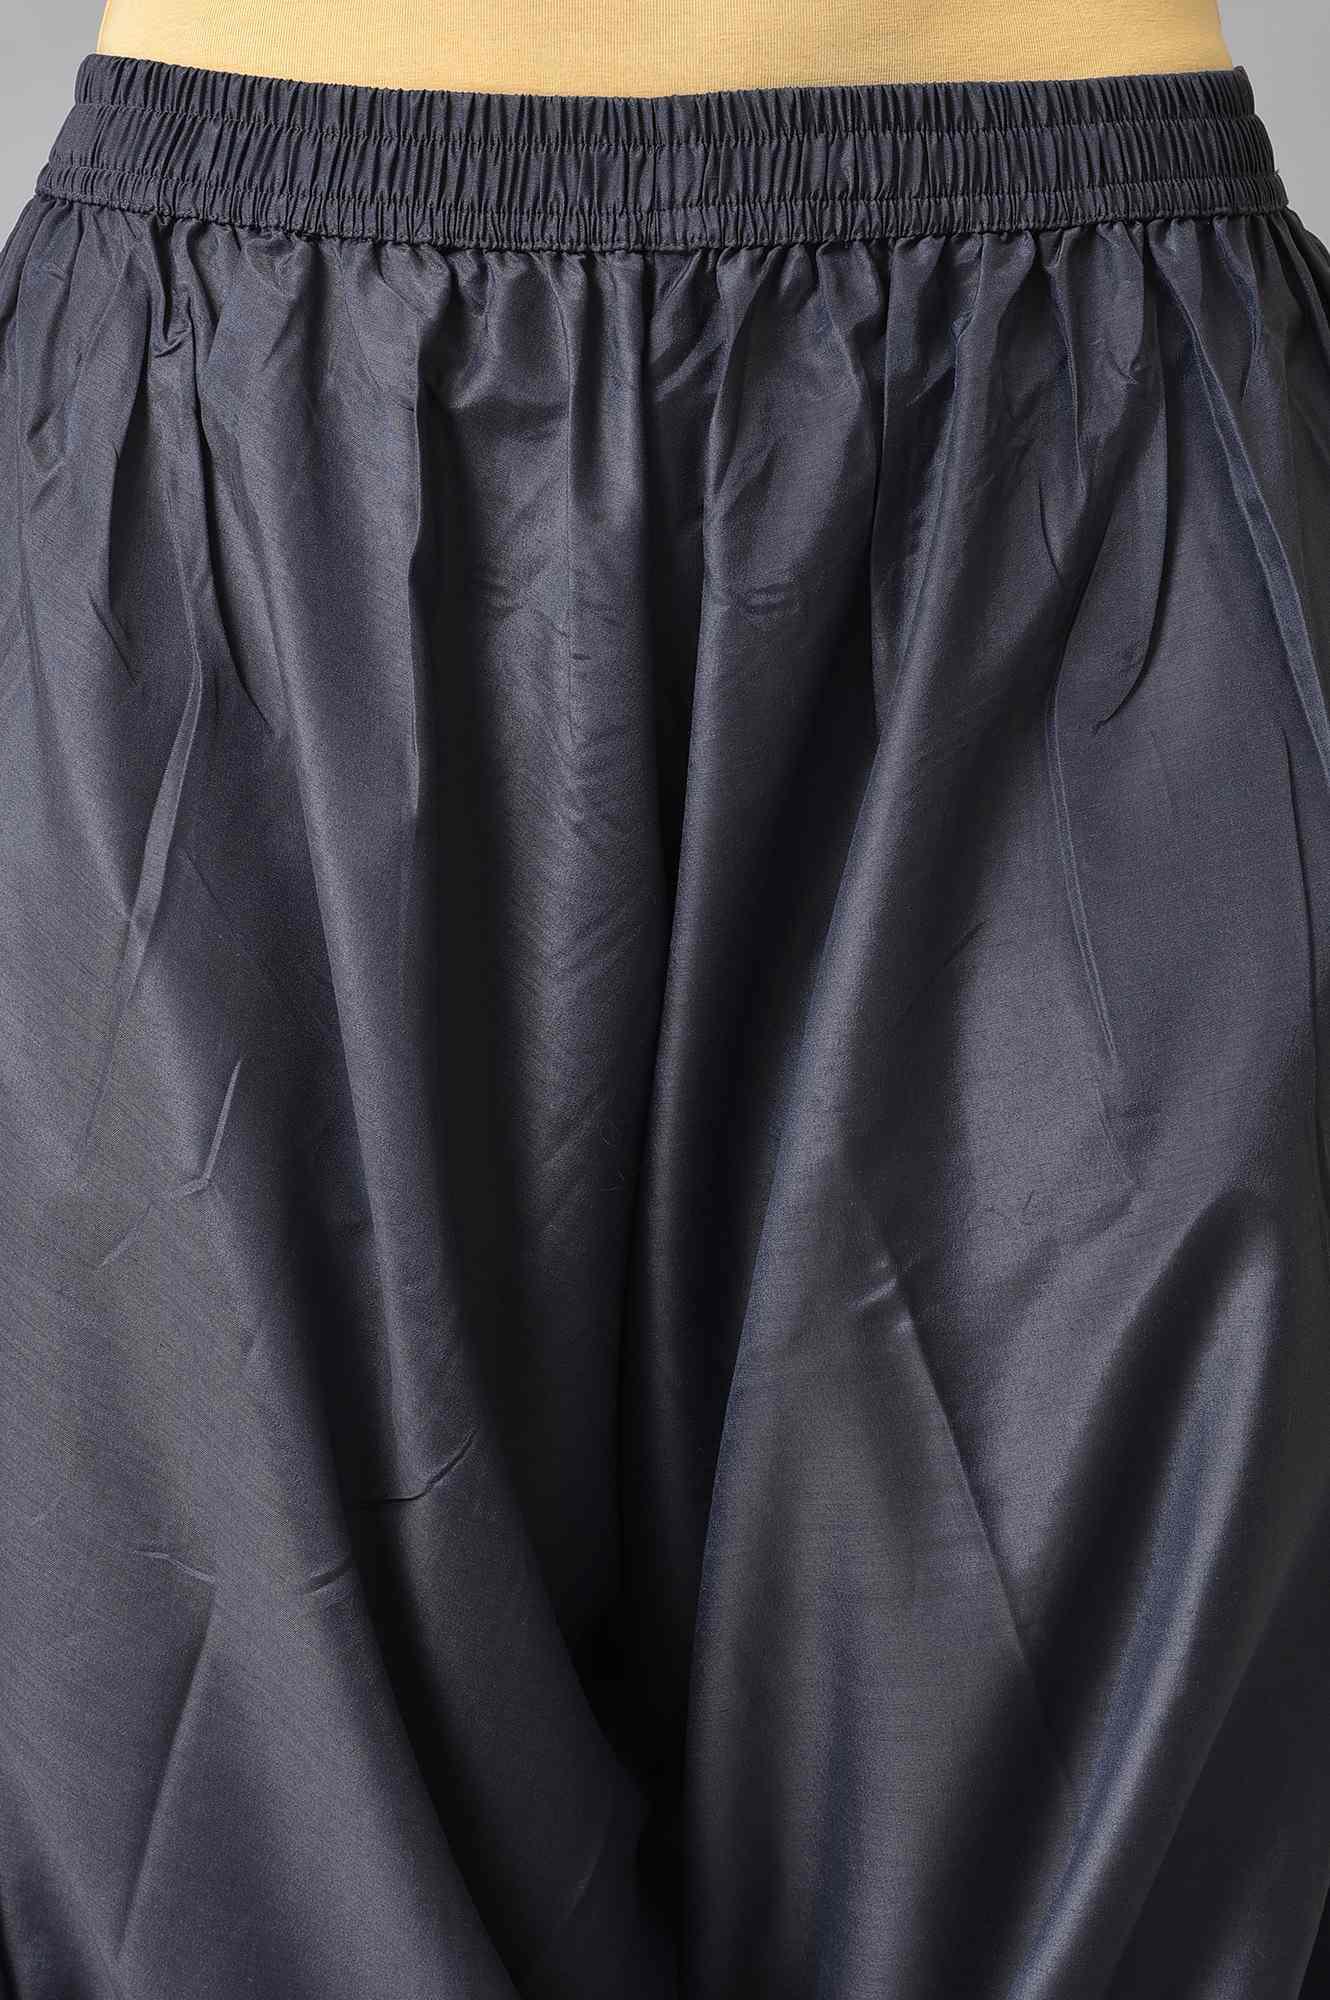 Grey Embroidered kurta, Draped Pants And Dupatta Set - wforwoman